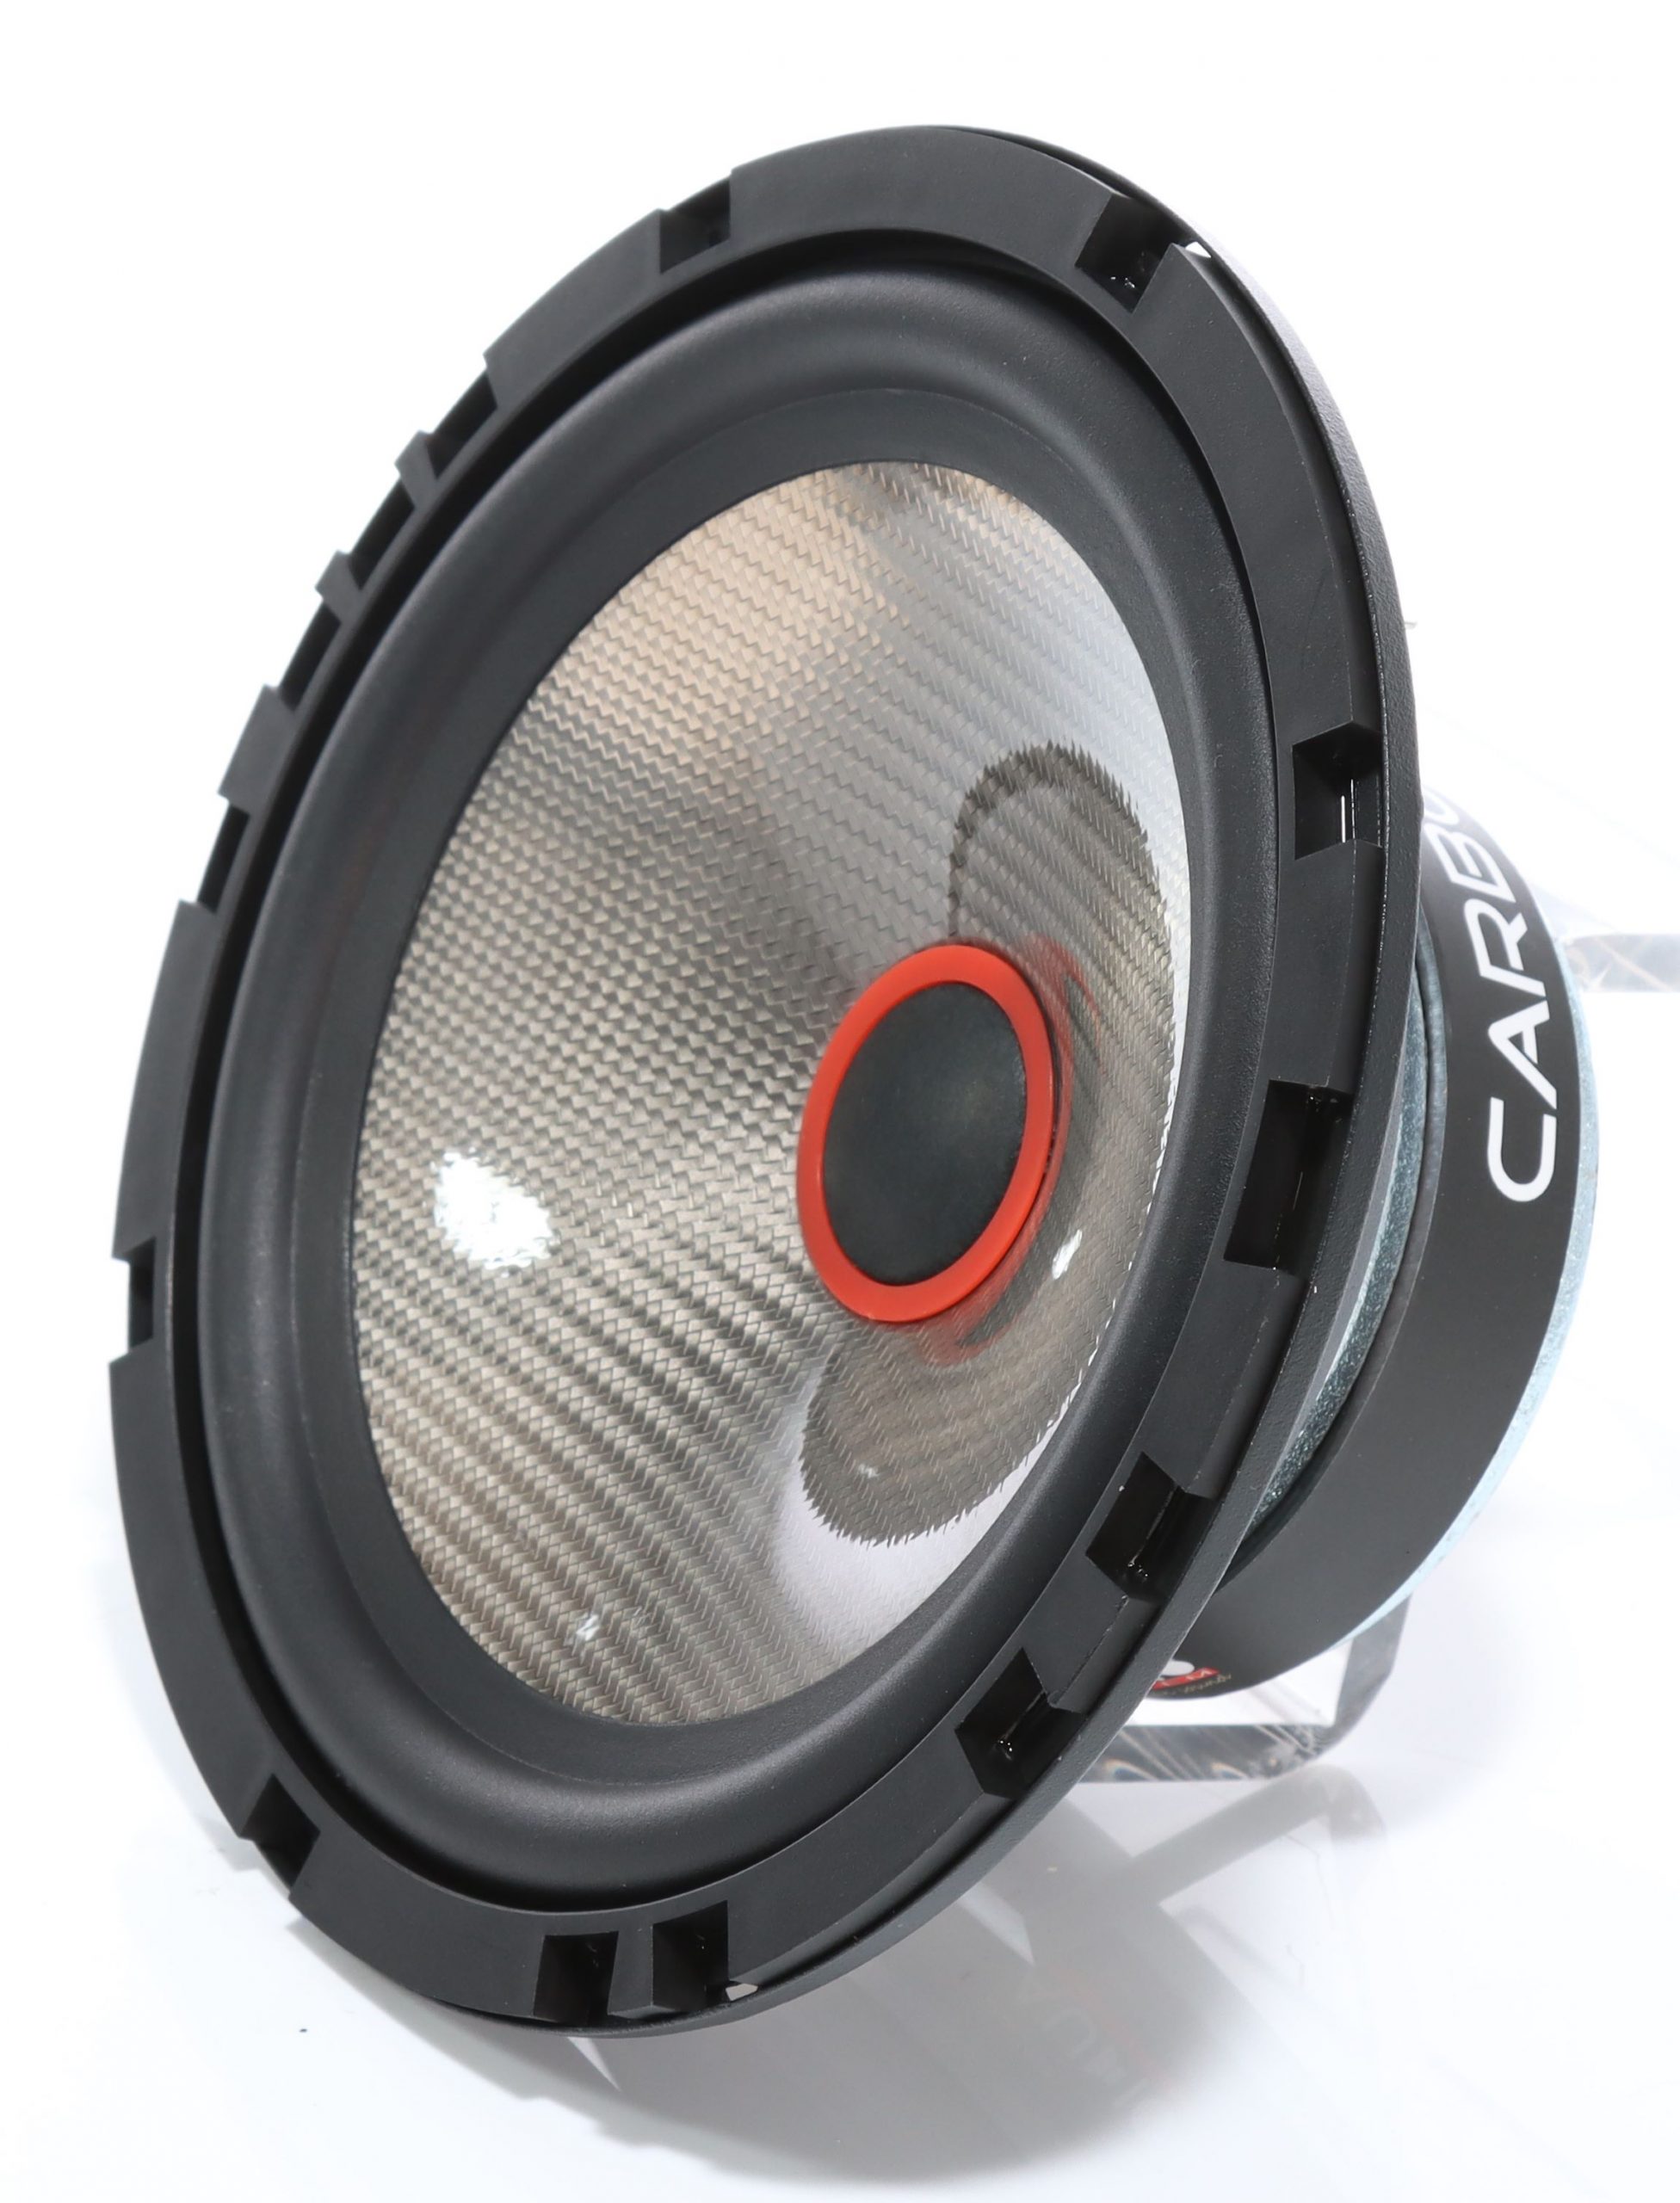 Audio System CARBON 165 Lautsprecher 16,5cm 2-Wege Compo Speaker System - SET